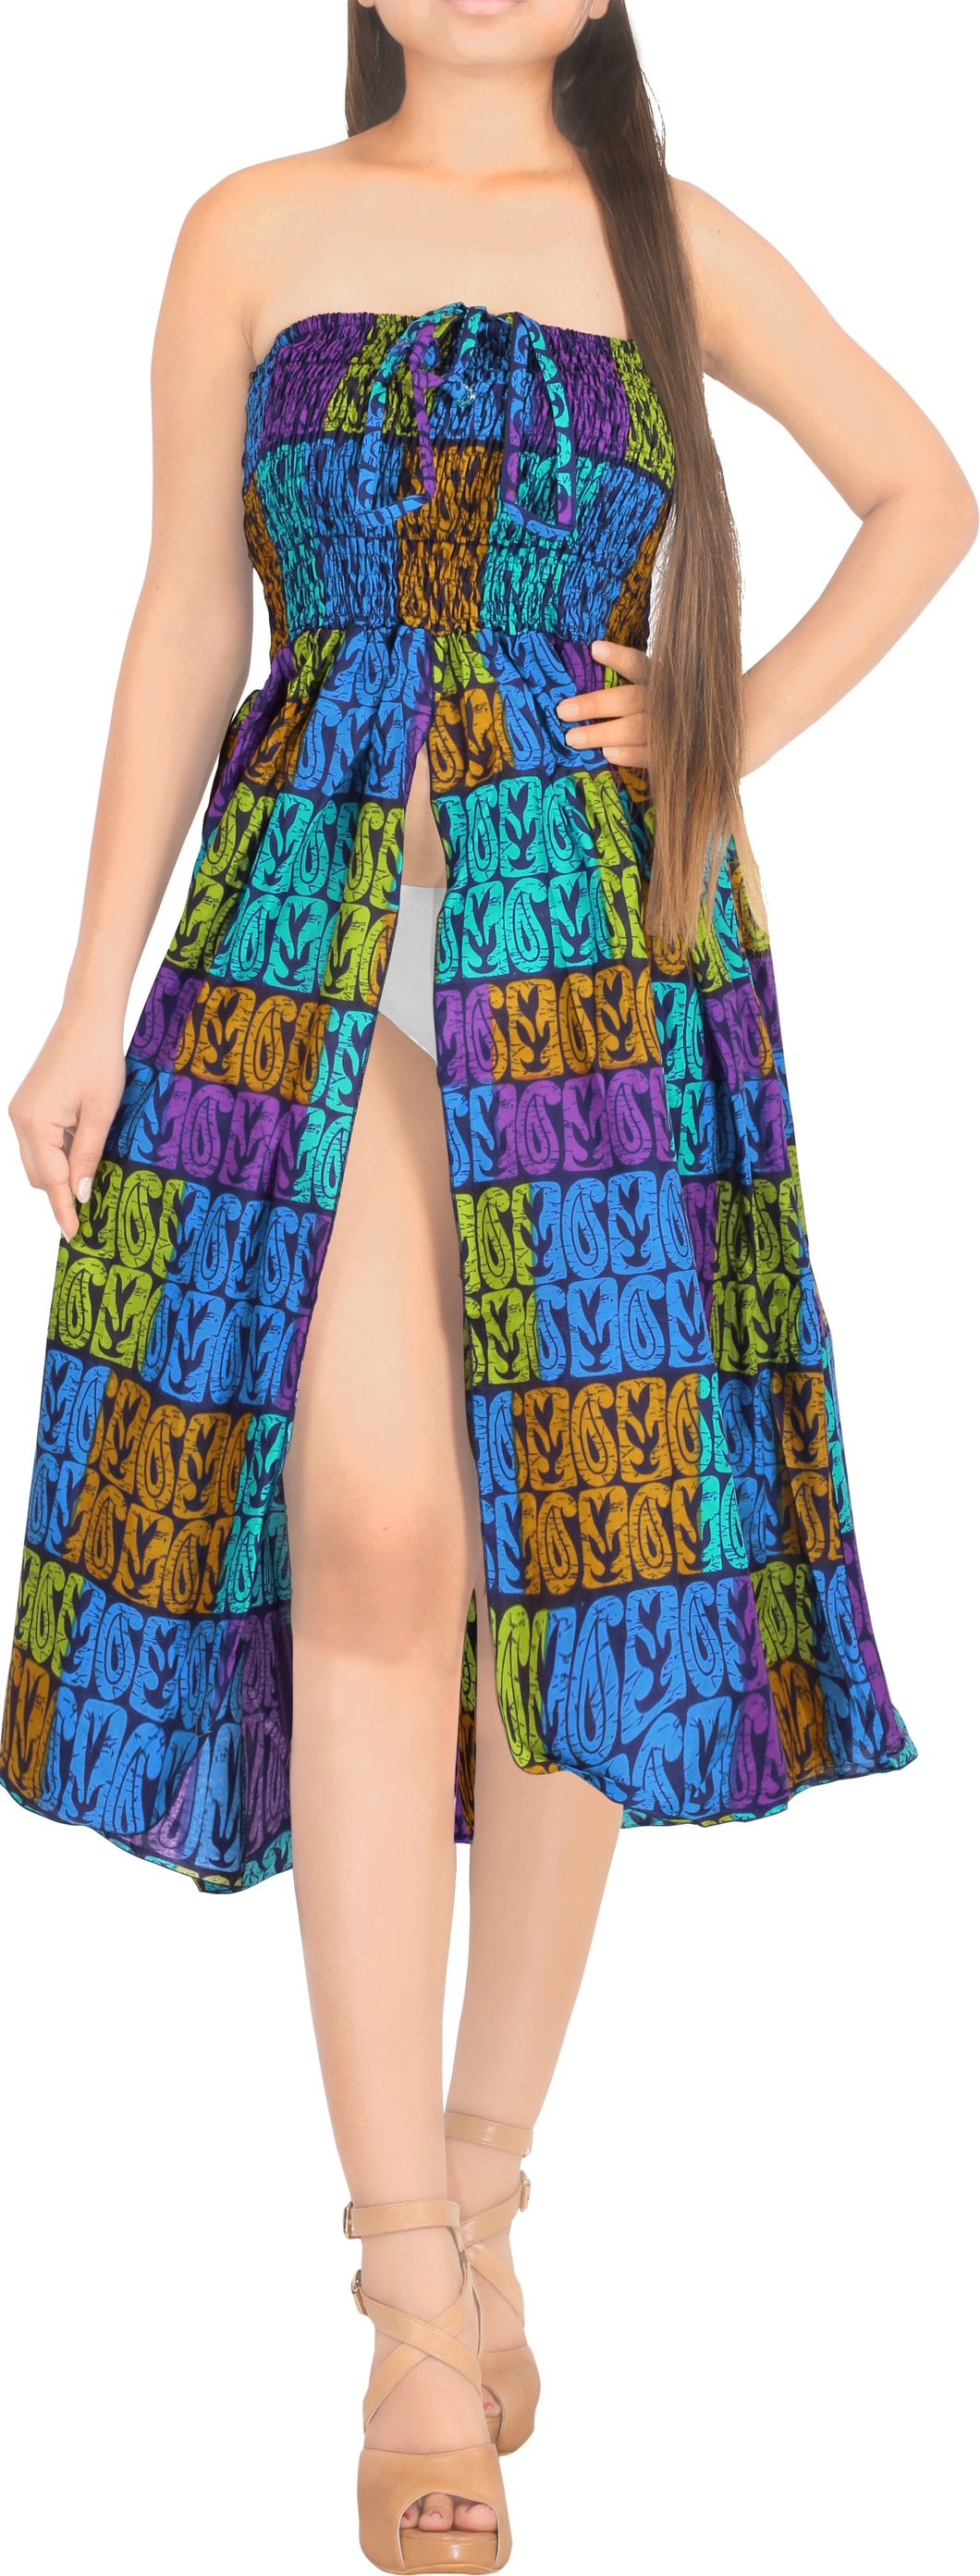 LA LEELA Chic Colorful And Printed Halter Neck Tube Dress For Women Dress Swimwear Swimsuit Coverup